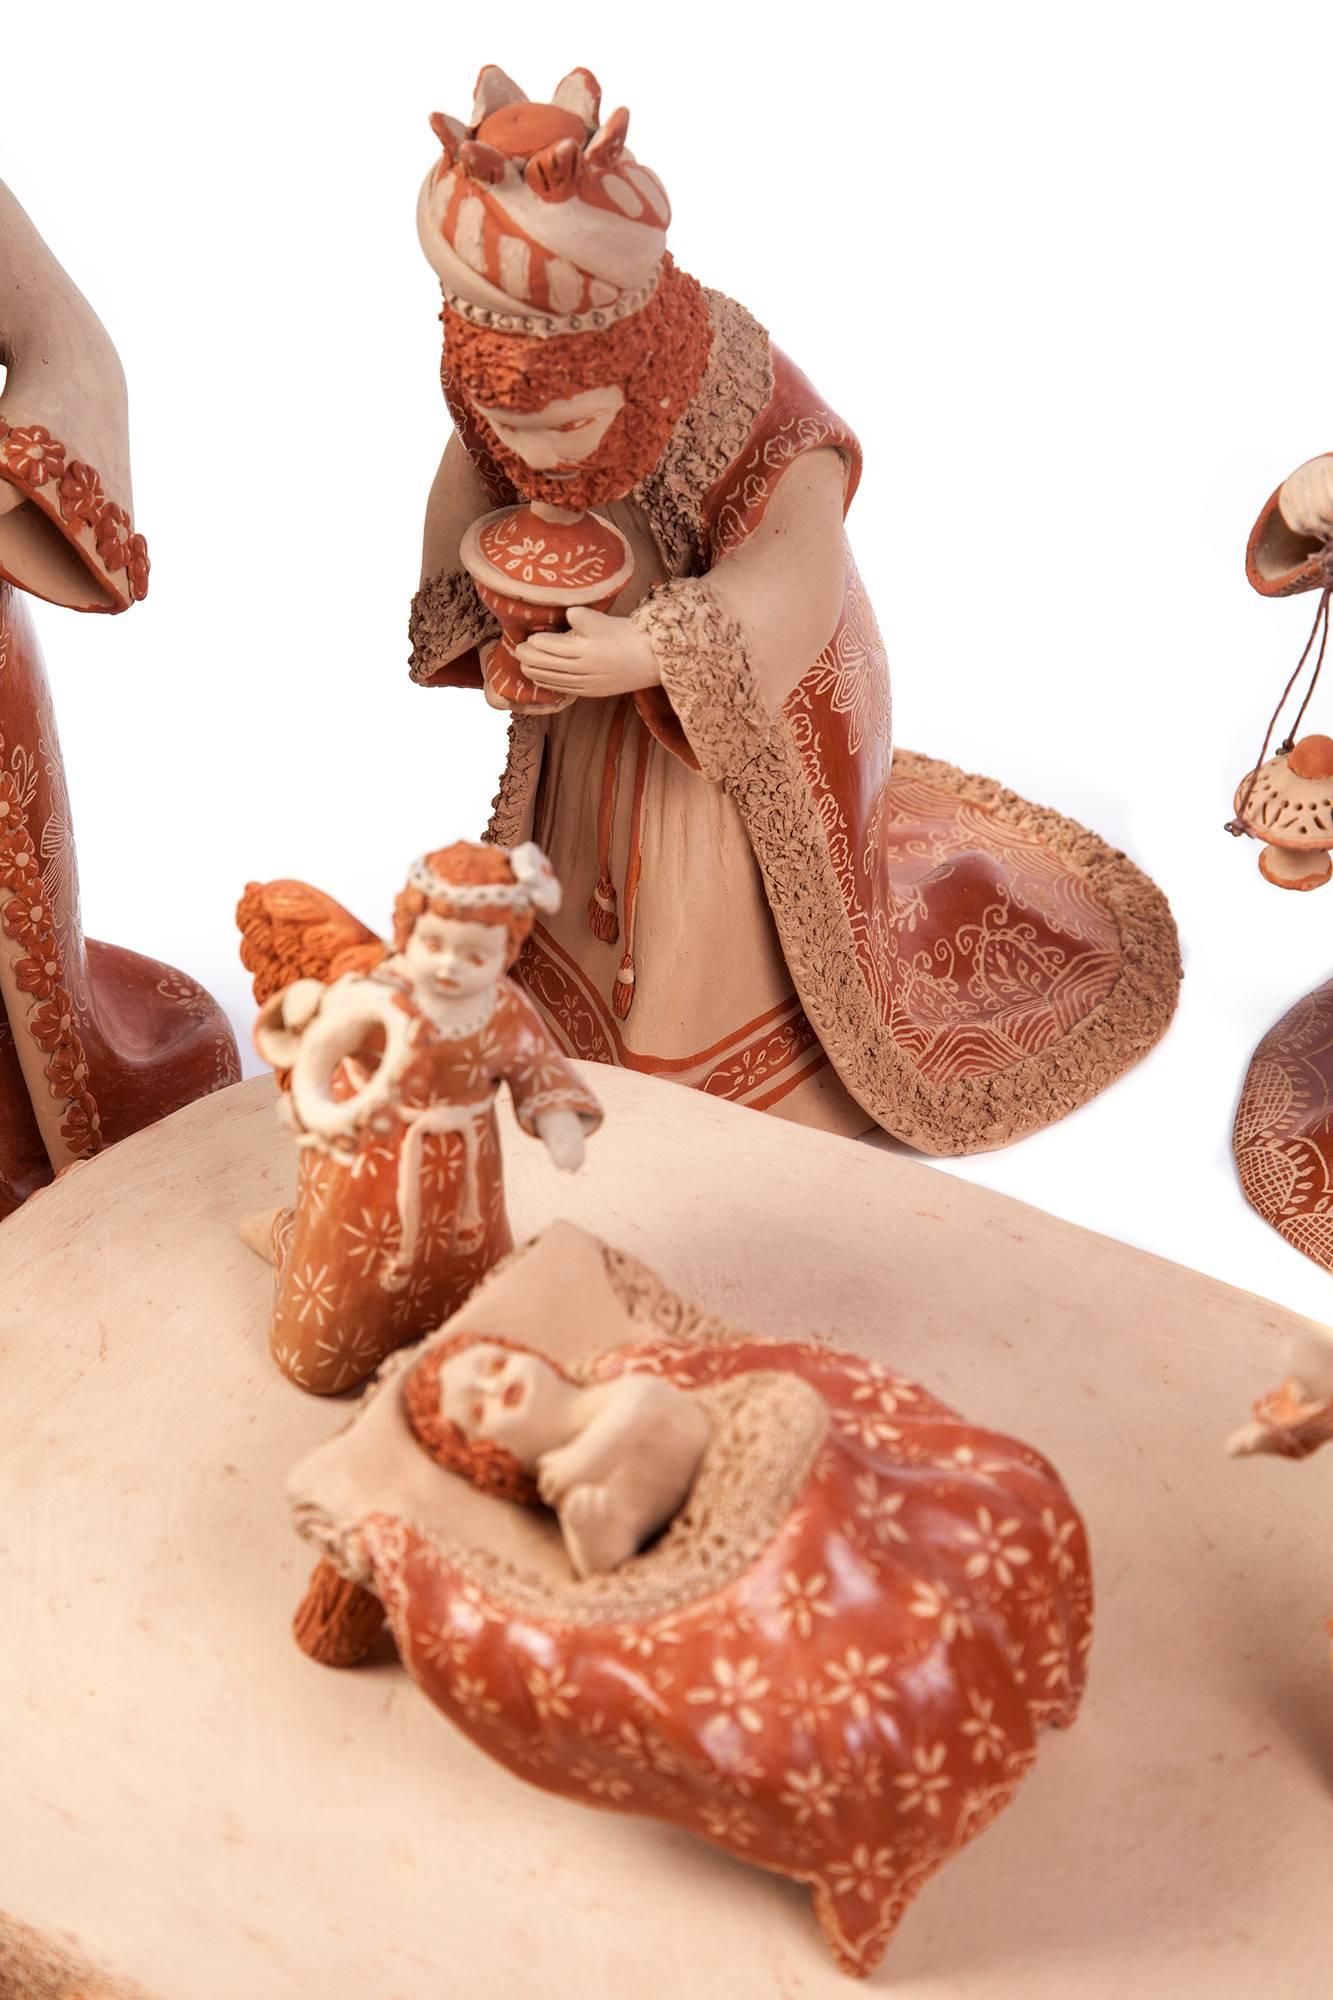 Nacimiento de Barro / Ceramics Mexican Folk Art Clay Nativity - Beige Abstract Sculpture by Unknown